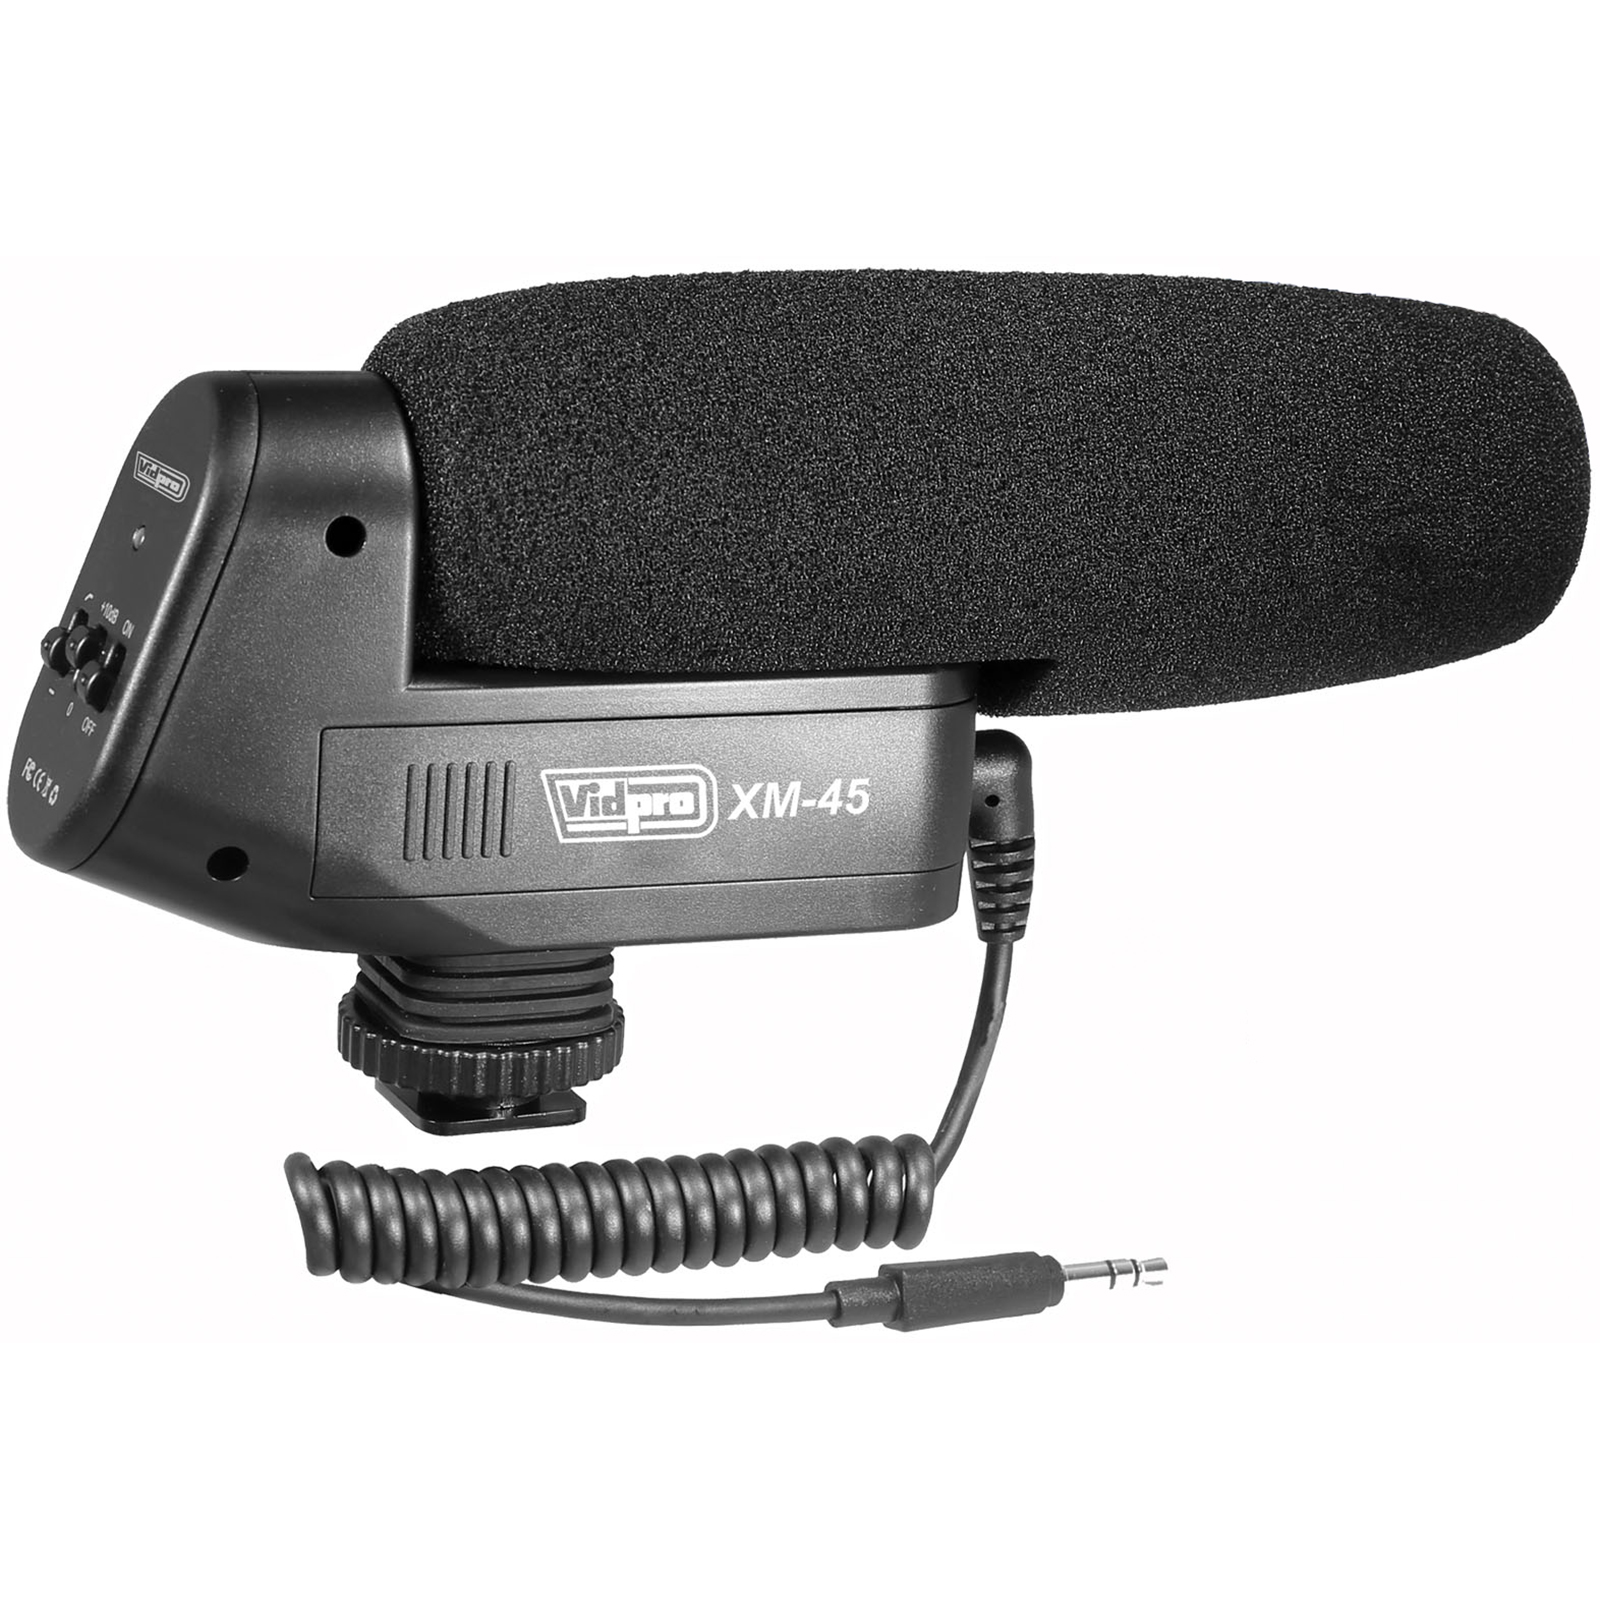 Nikon D5 Digital SLR Camera Body (Dual CF Slots) with Microphone + LED Video Light + GPS Unit + Kit - image 3 of 6